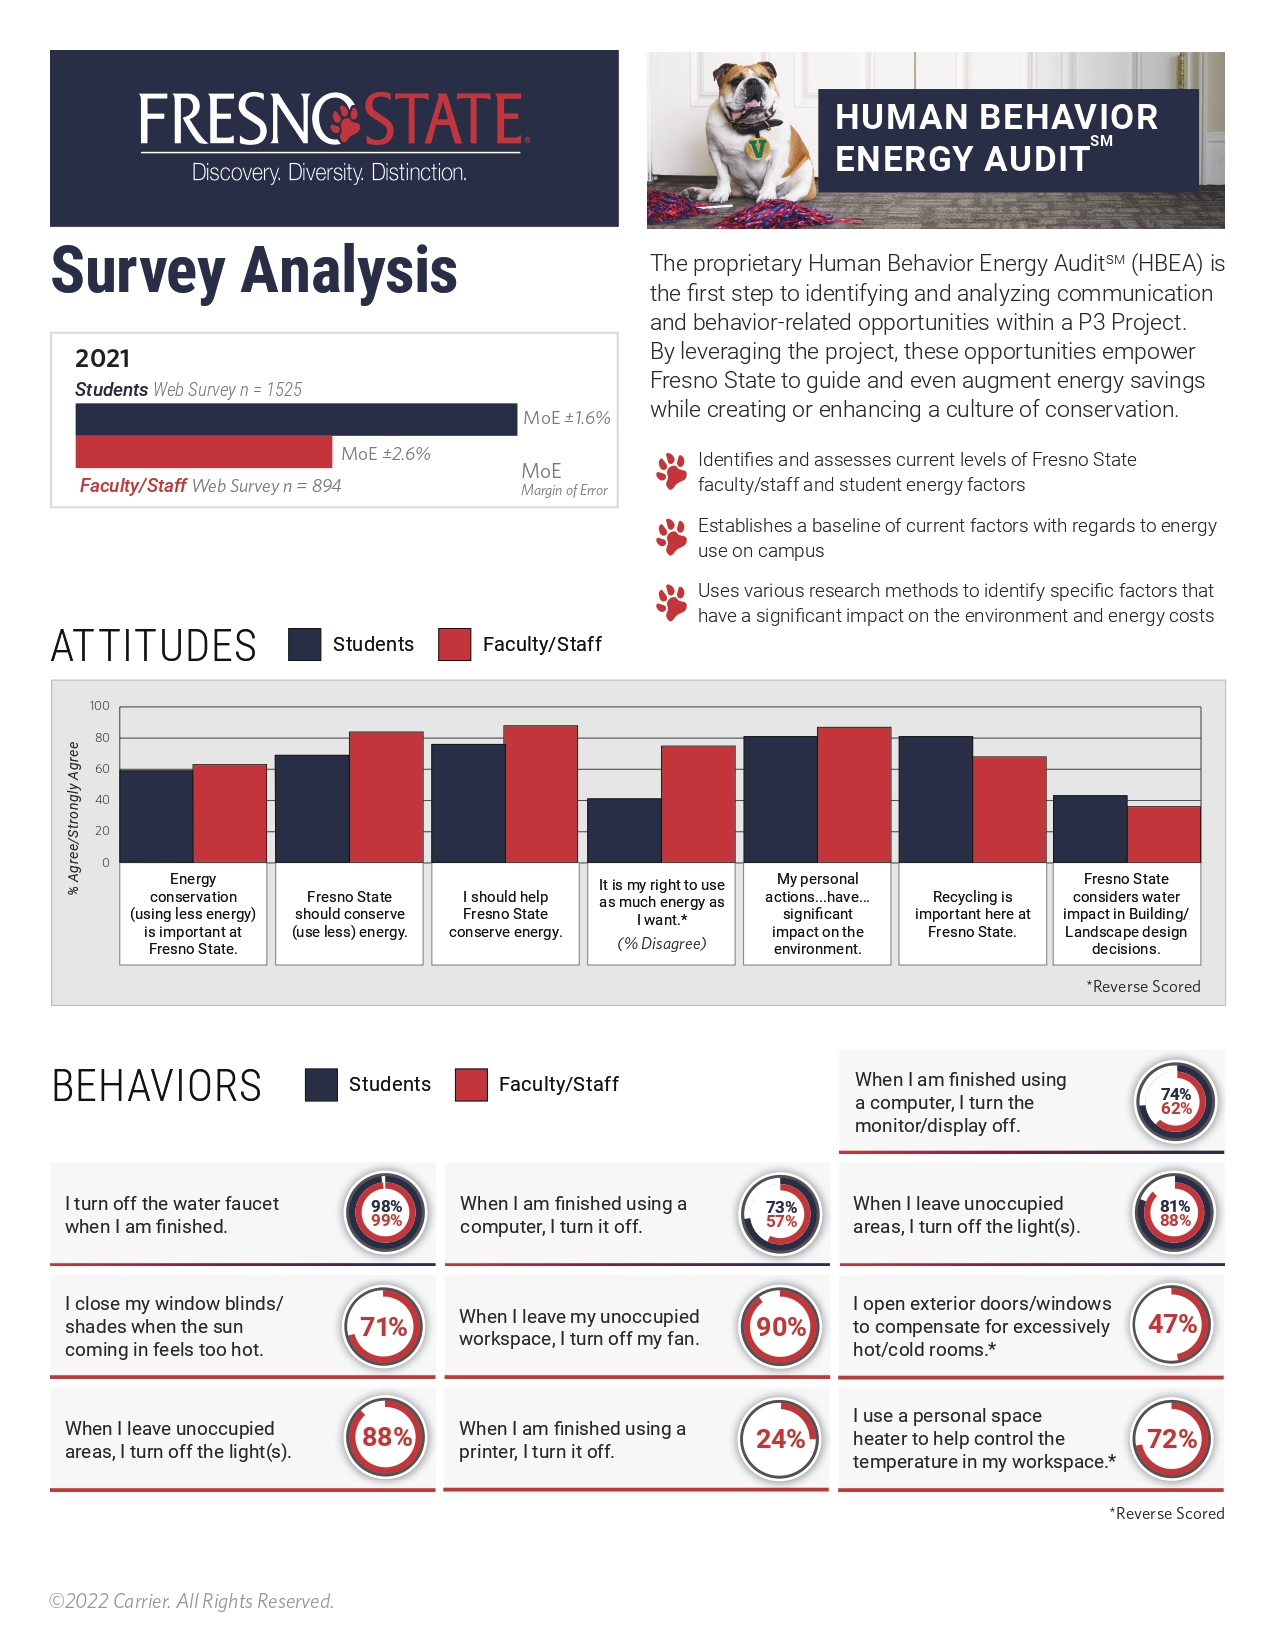 Survey Analysis and Behaviors 